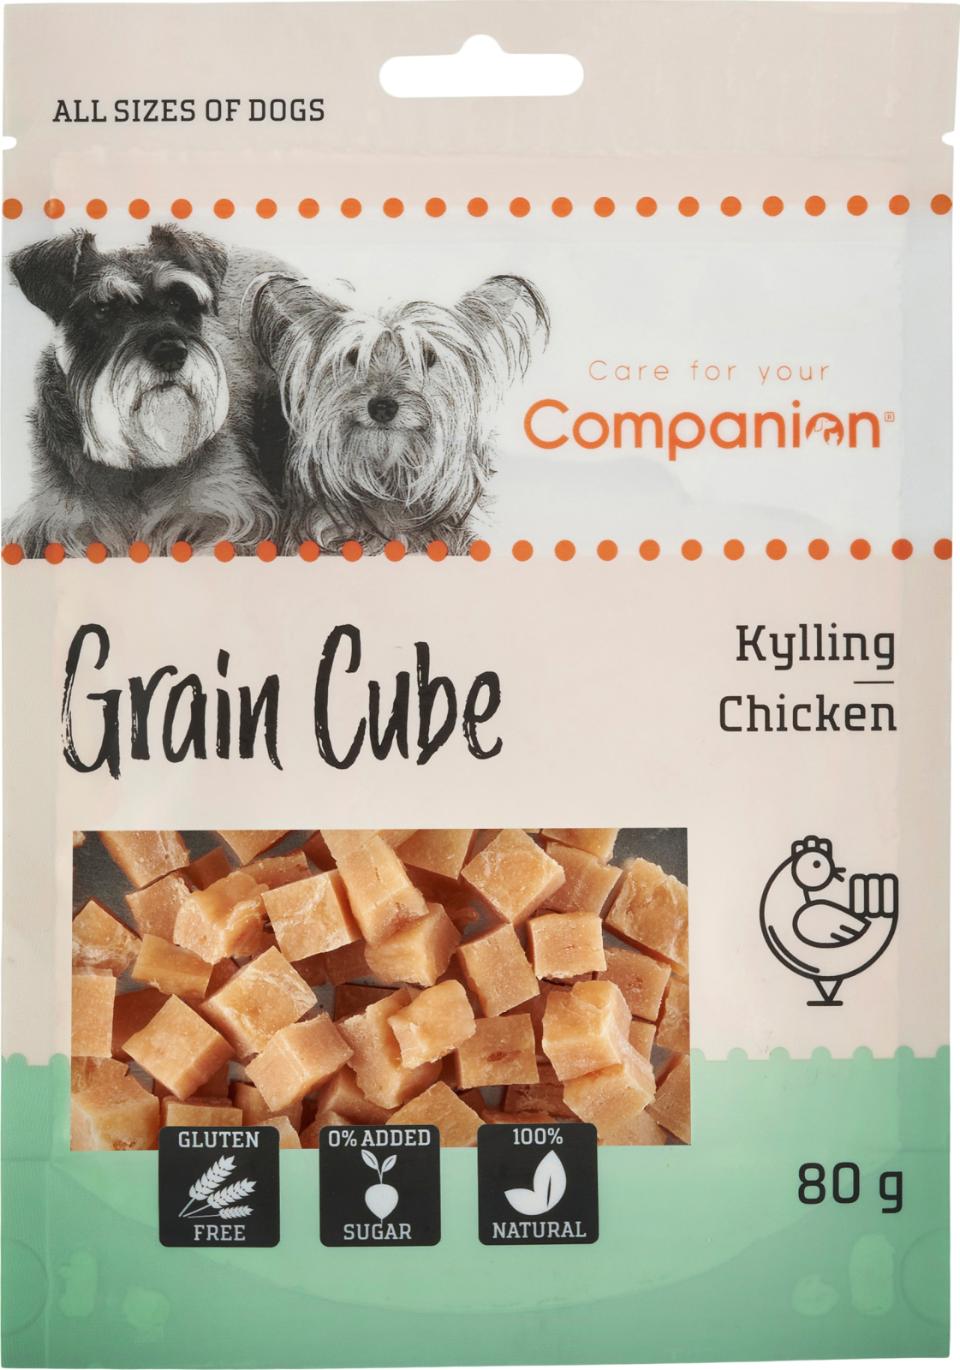 Companion Grain cube kylling